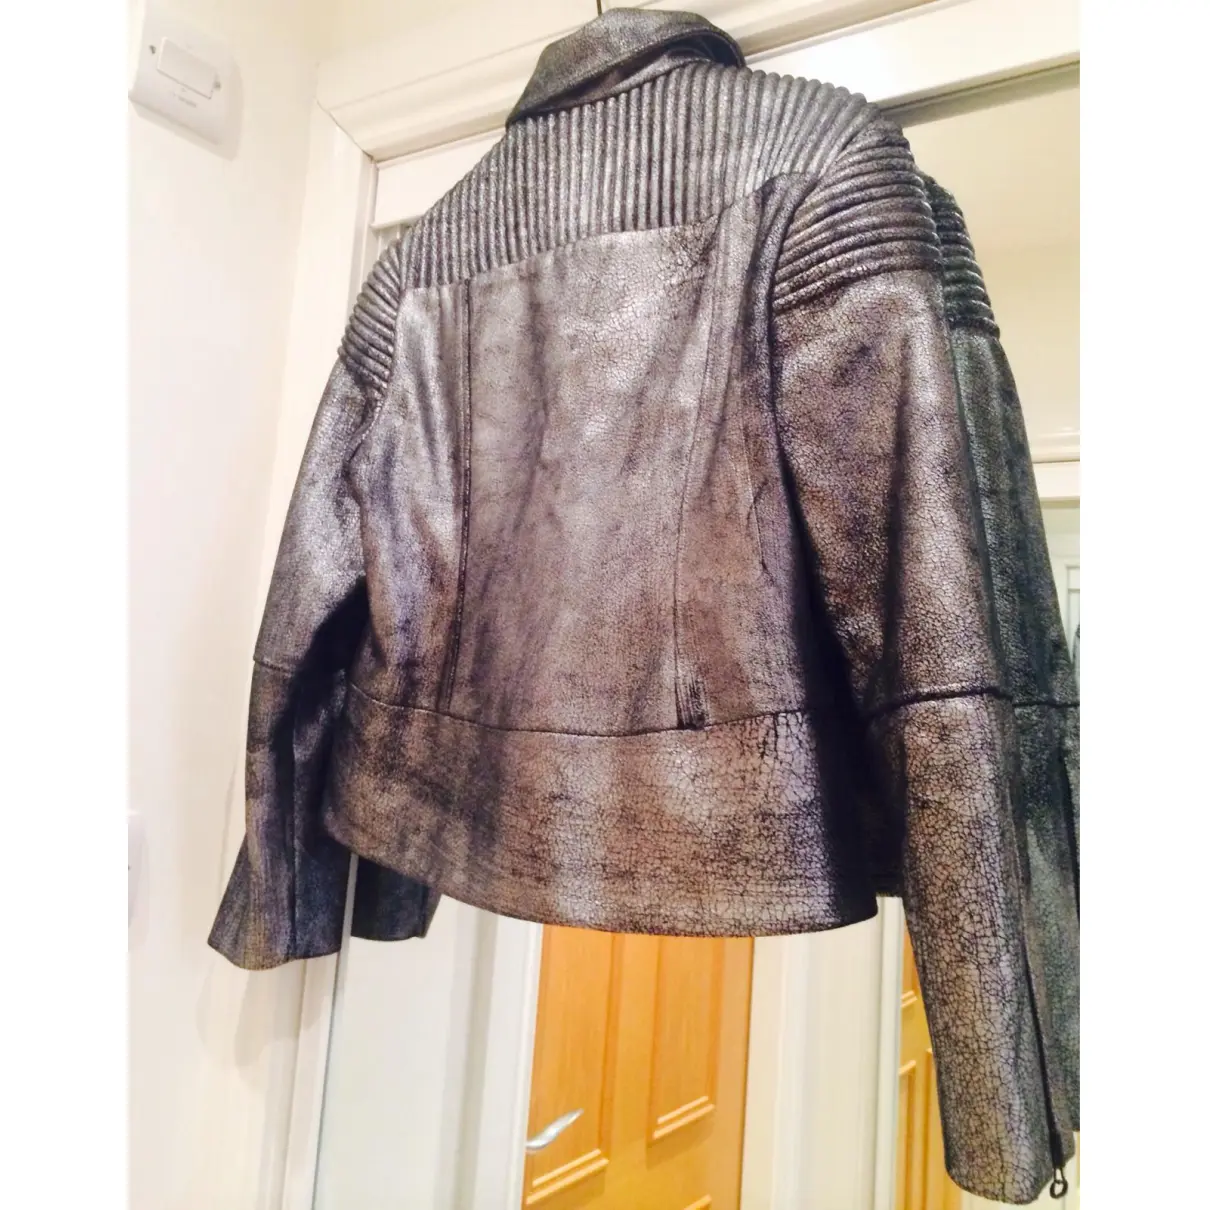 Buy Zoe Jordan Leather jacket online